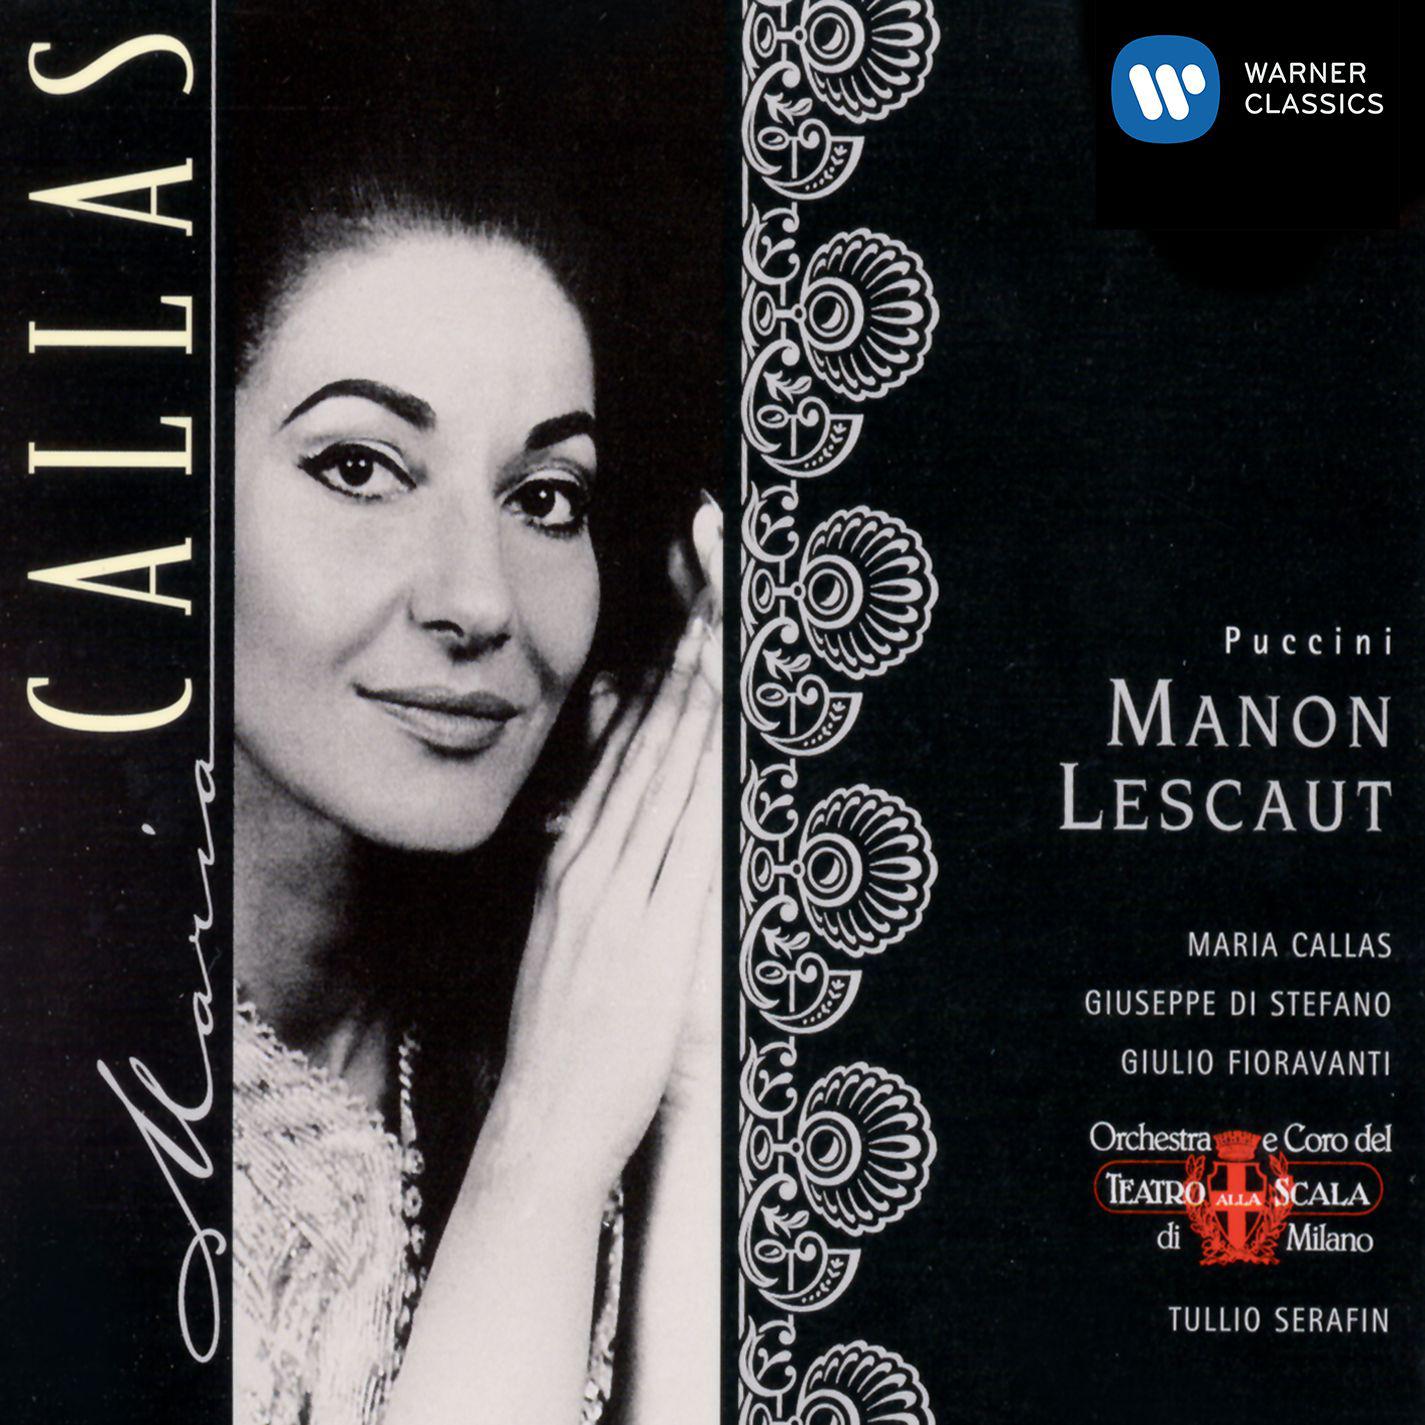 Manon Lescaut, Act II:" Oh, saro la piu bella!"